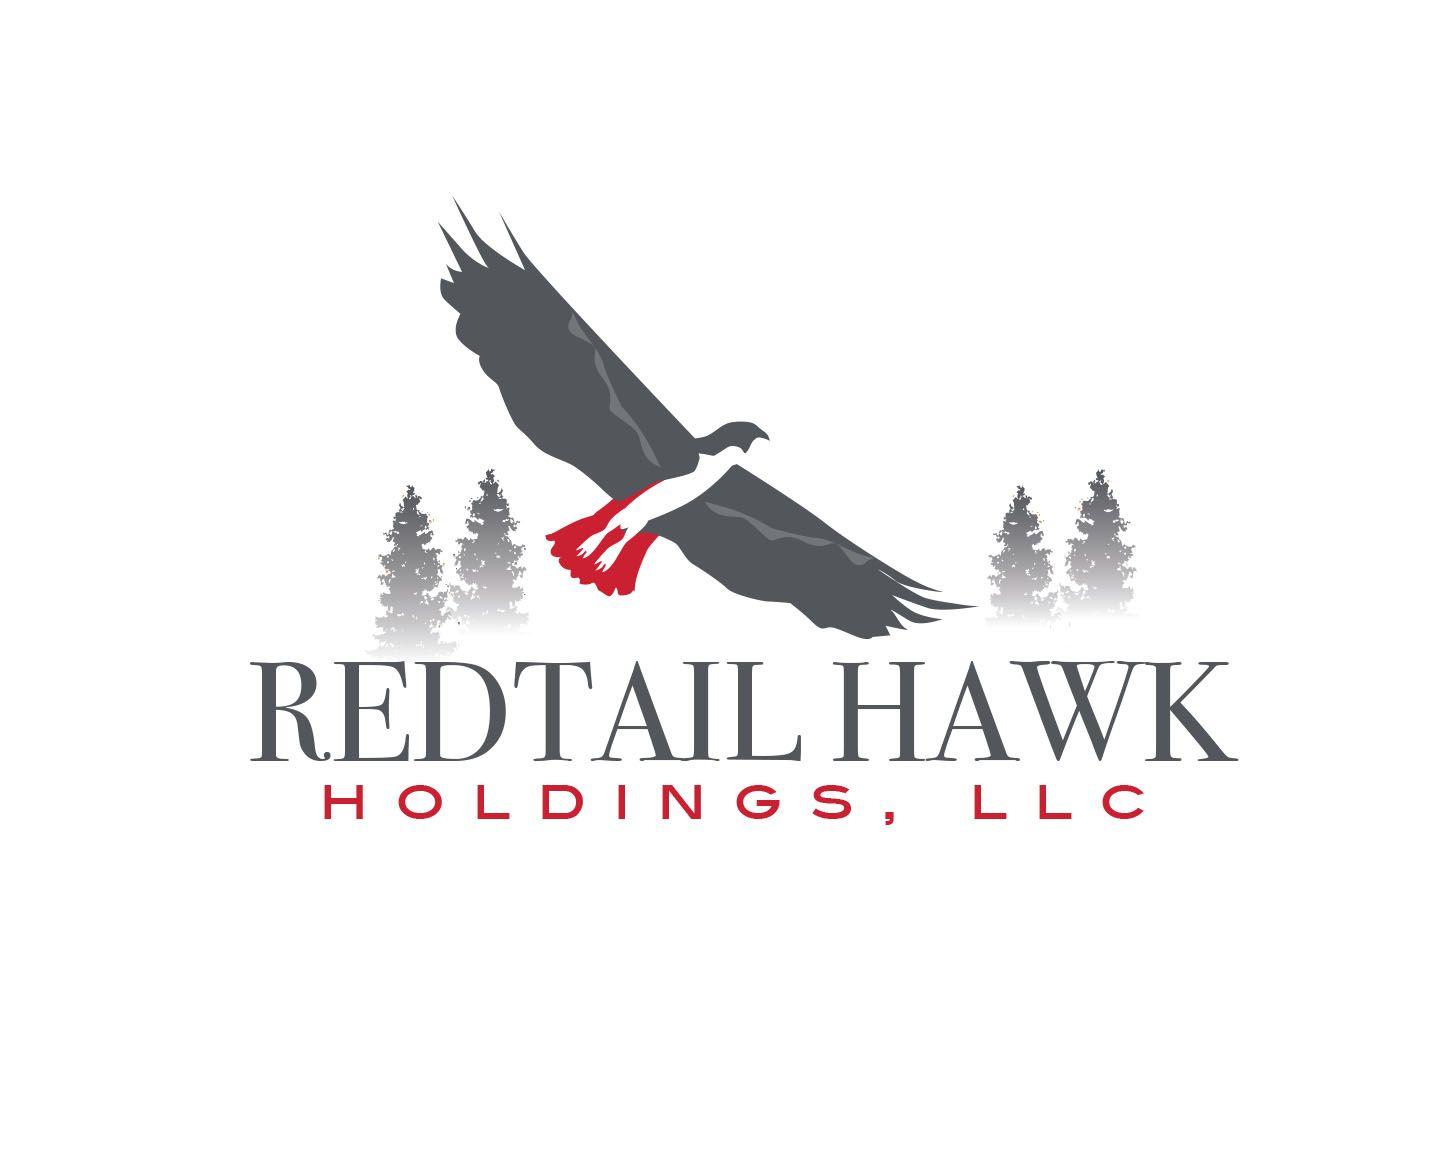 Red Tail Hawk Logo - Entry. Redtail Hawk Holdings, LLC